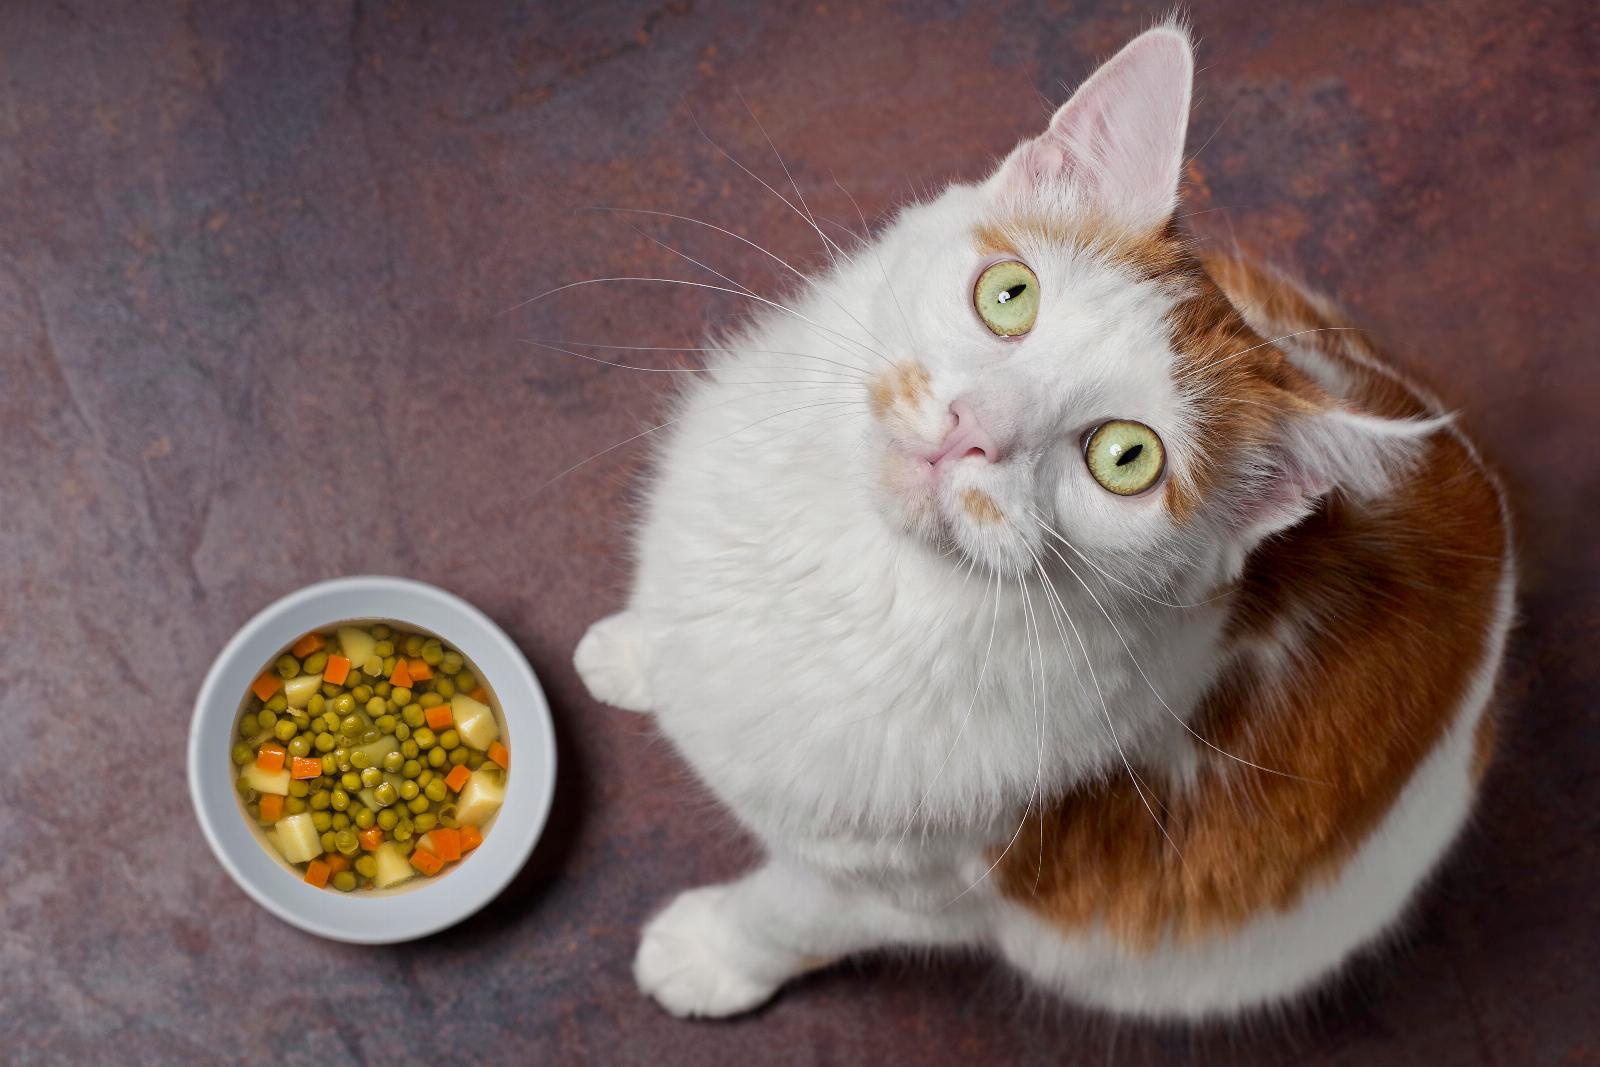 Can Cats Be Vegan?